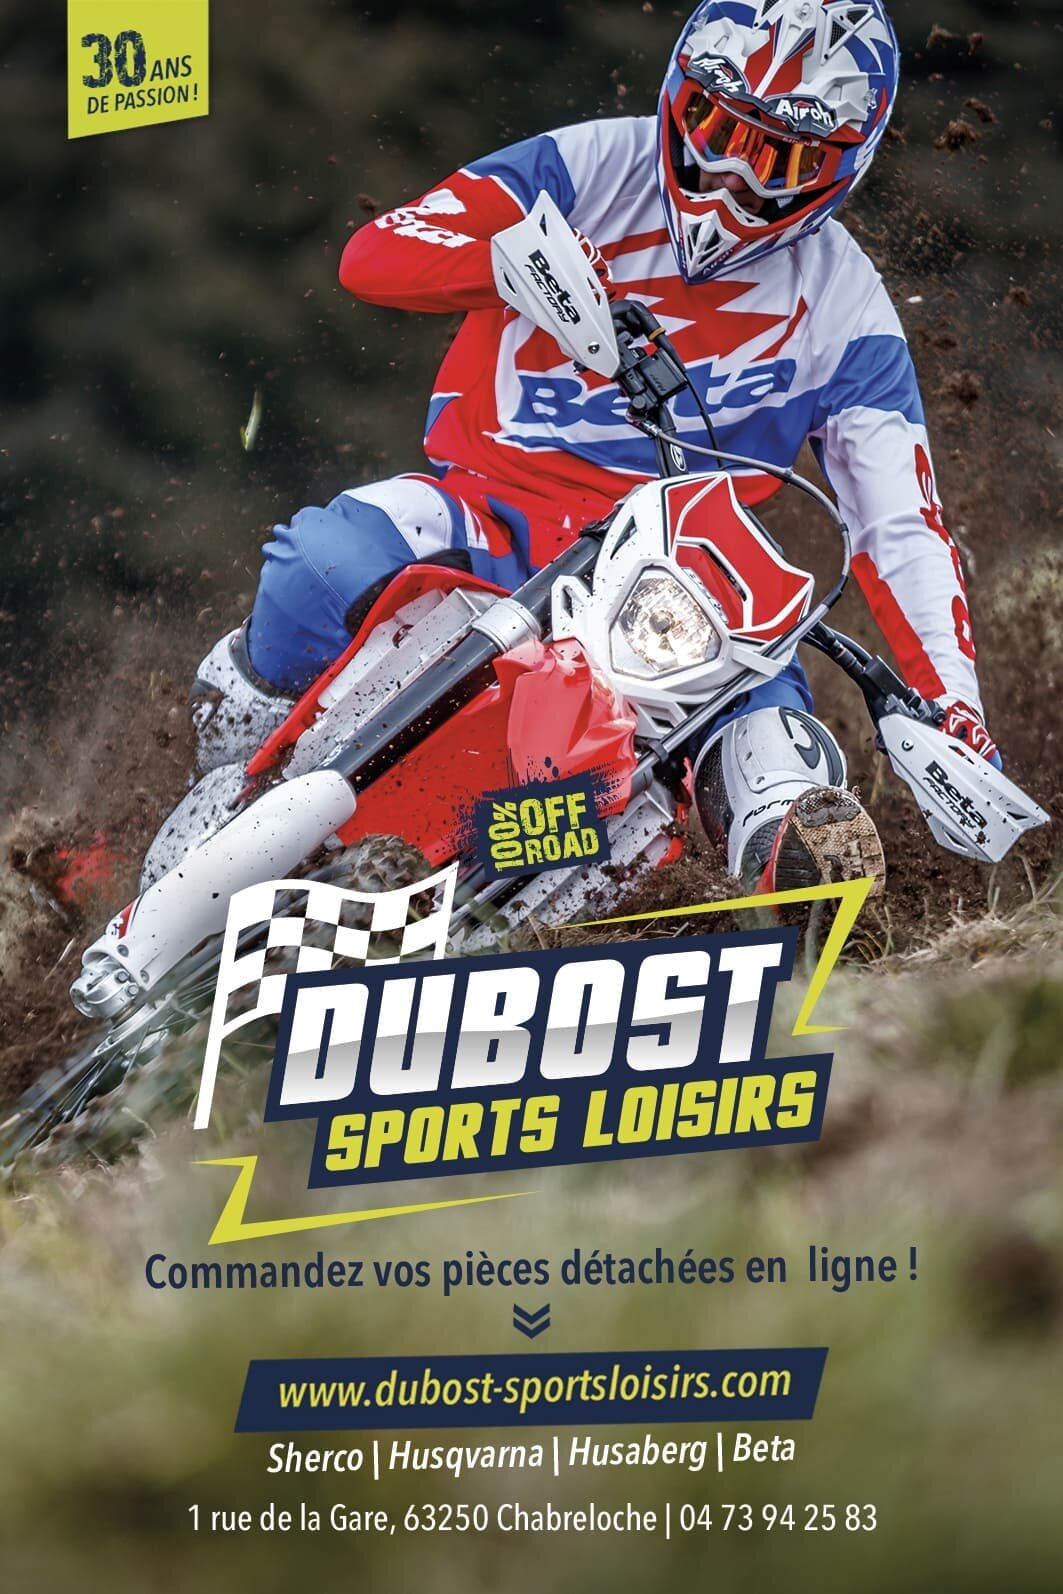 dubost-sports-loisirs_creation-pub-mag_v2.jpg